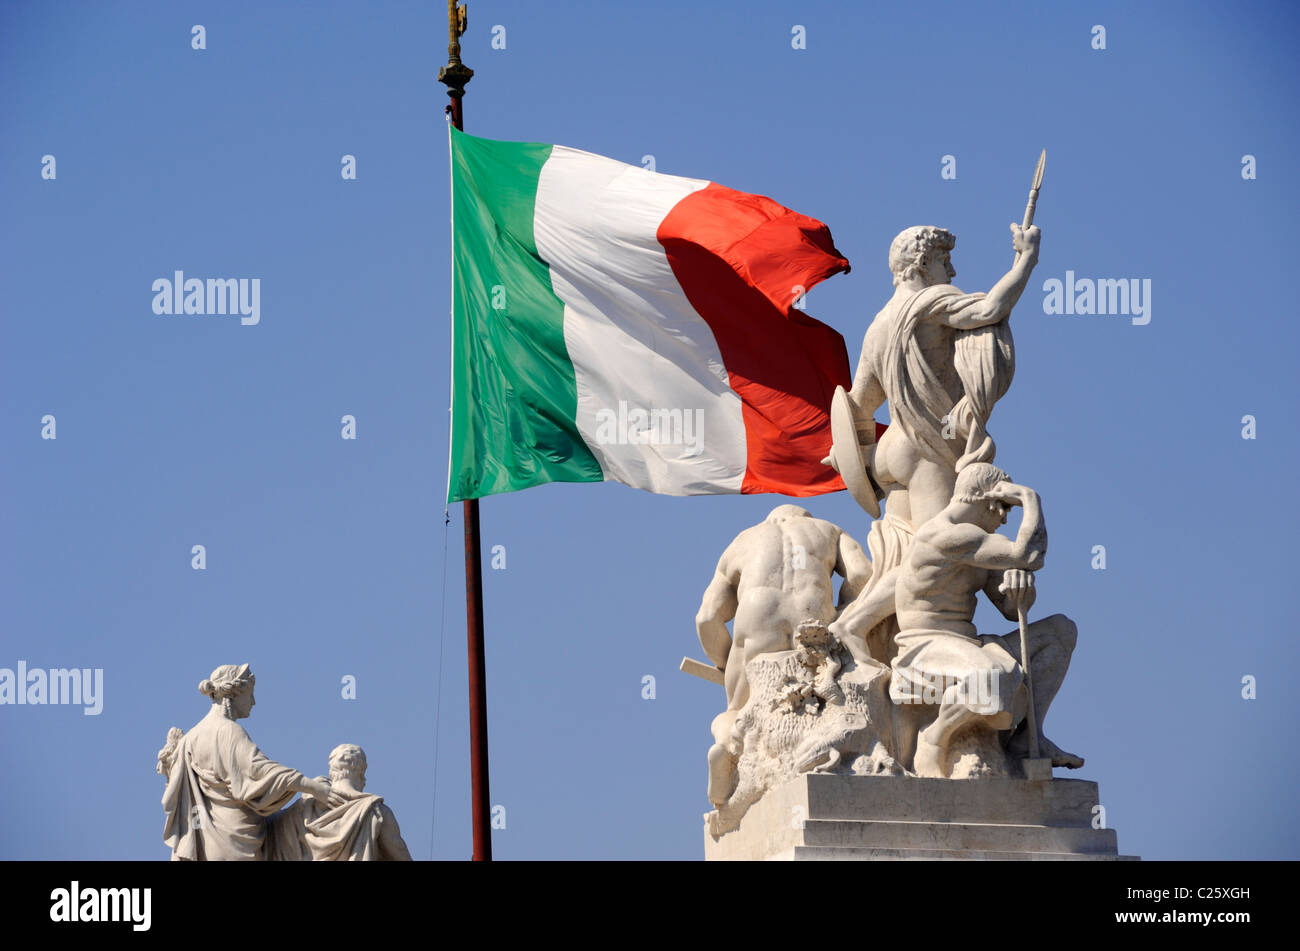 Italie, Rome, Piazza Venezia, Vittoriano, statues et drapeau italien Banque D'Images